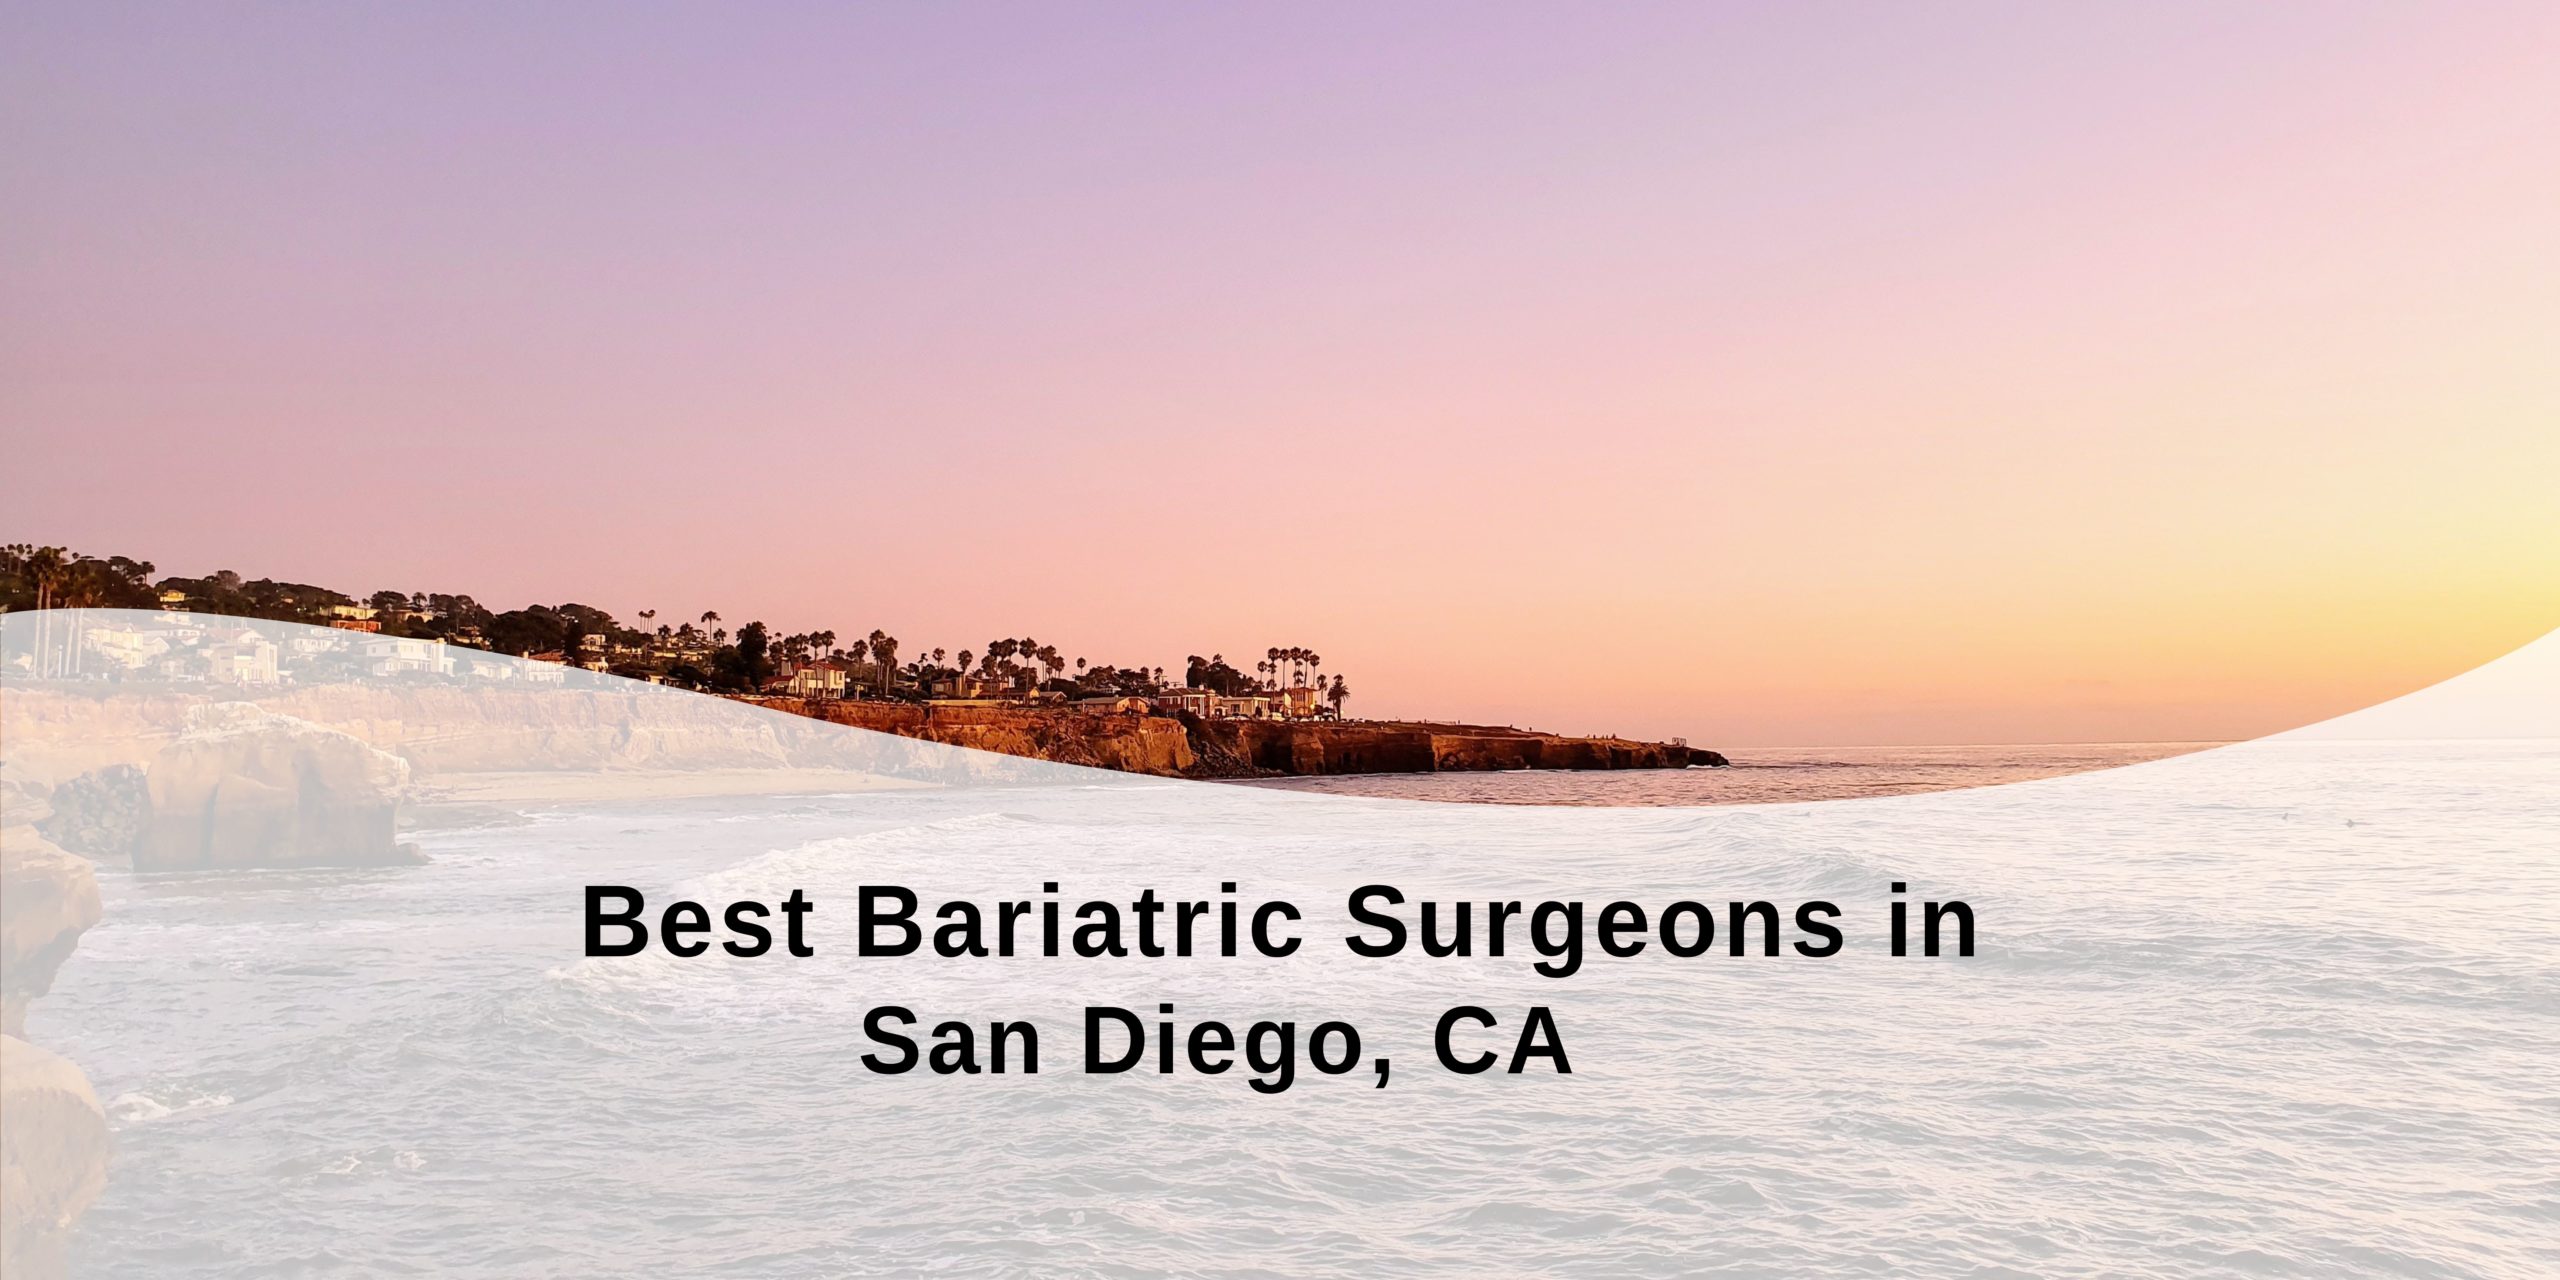 Best Bariatric Surgeons in San Diego, CA